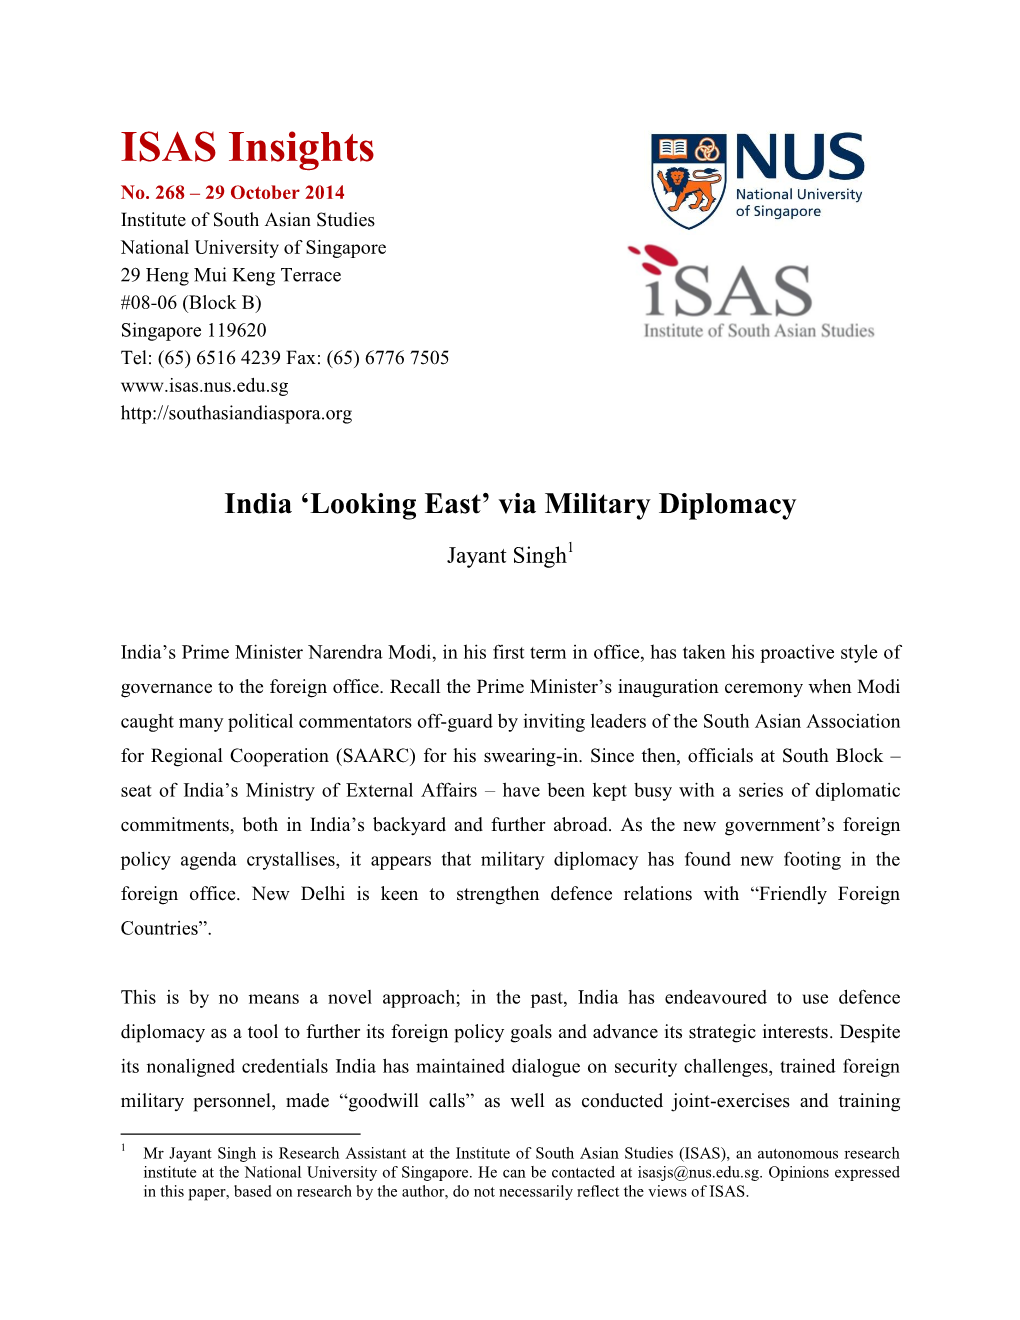 India 'Looking East' Via Military Diplomacy